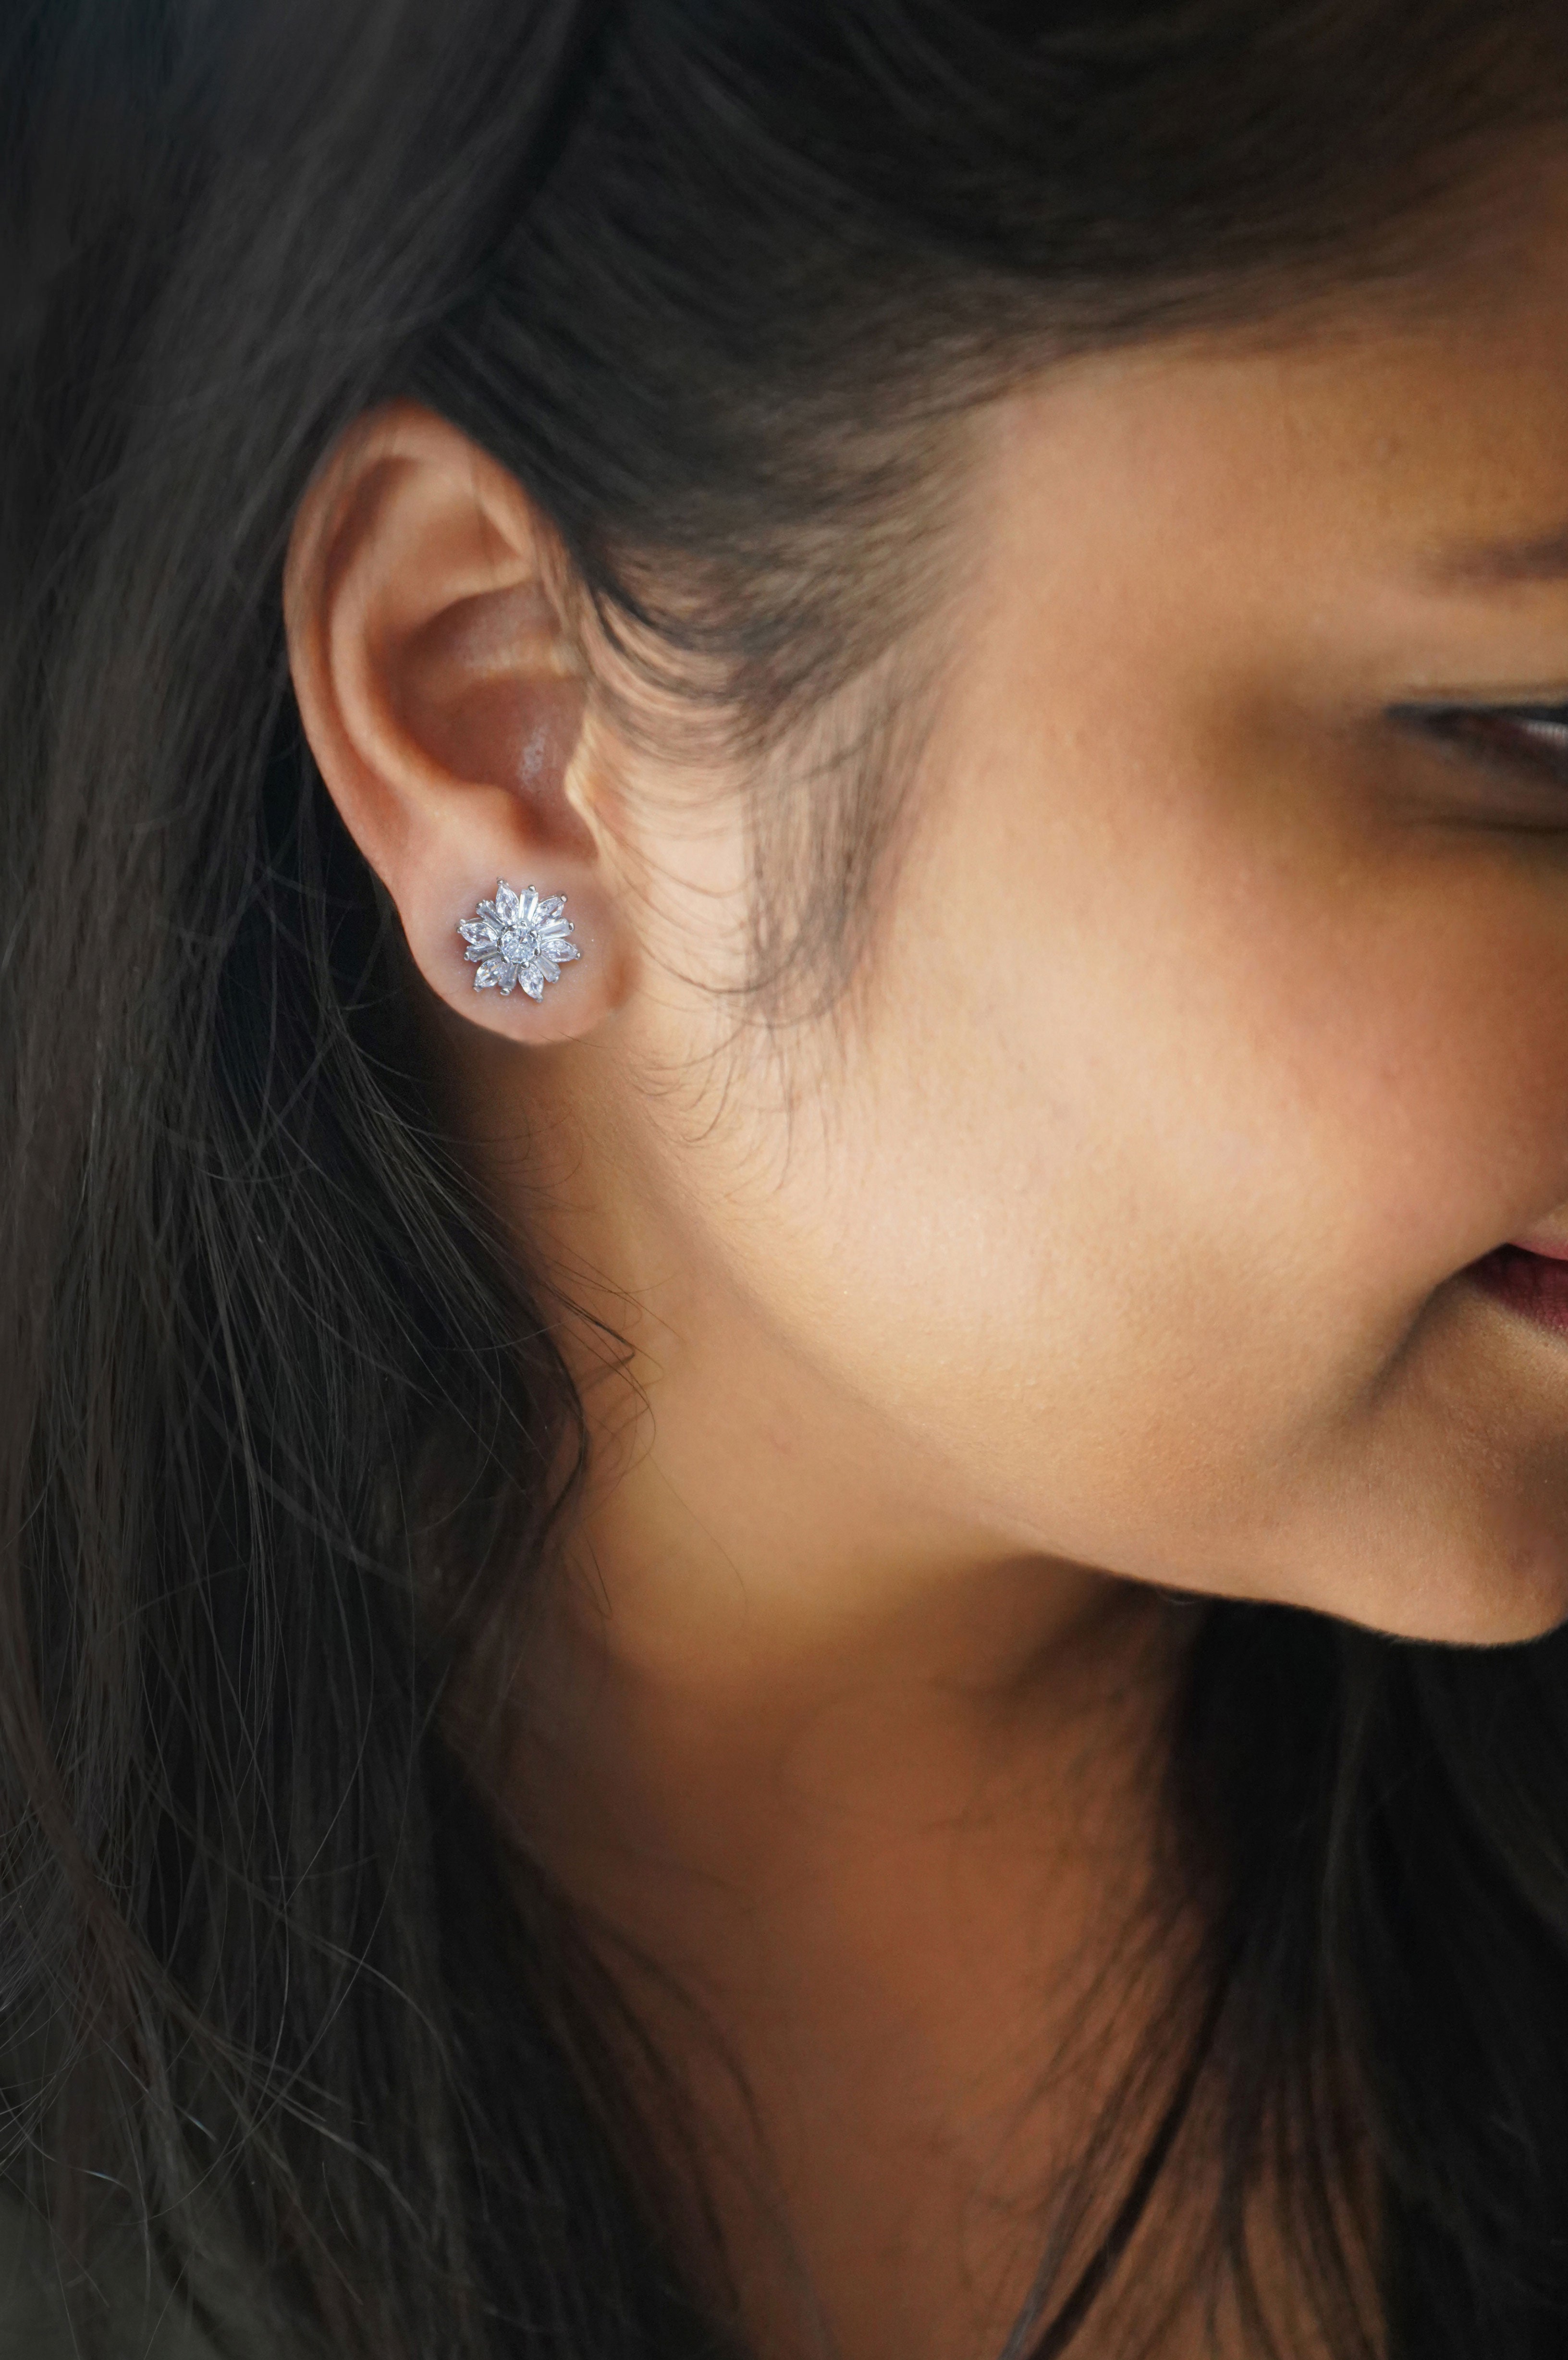 Amazoncom Cluster diamond earrings 14k Rose Gold Flower Earrings 062  carat Clothing Shoes  Jewelry